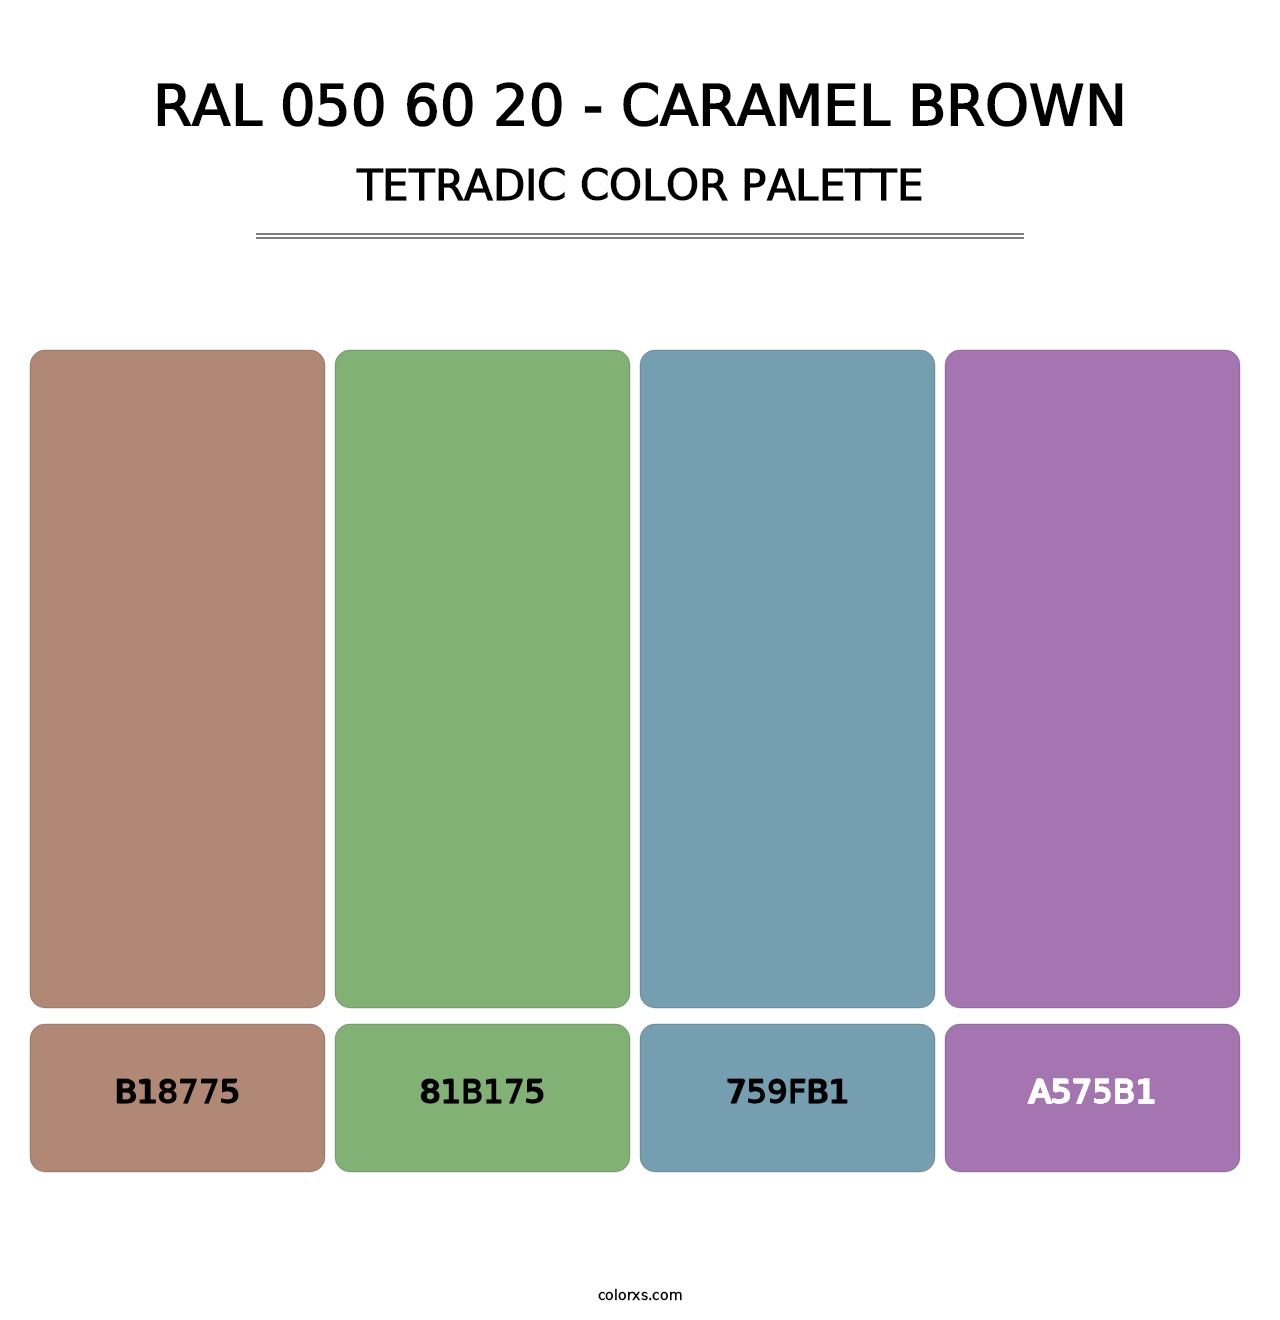 RAL 050 60 20 - Caramel Brown - Tetradic Color Palette